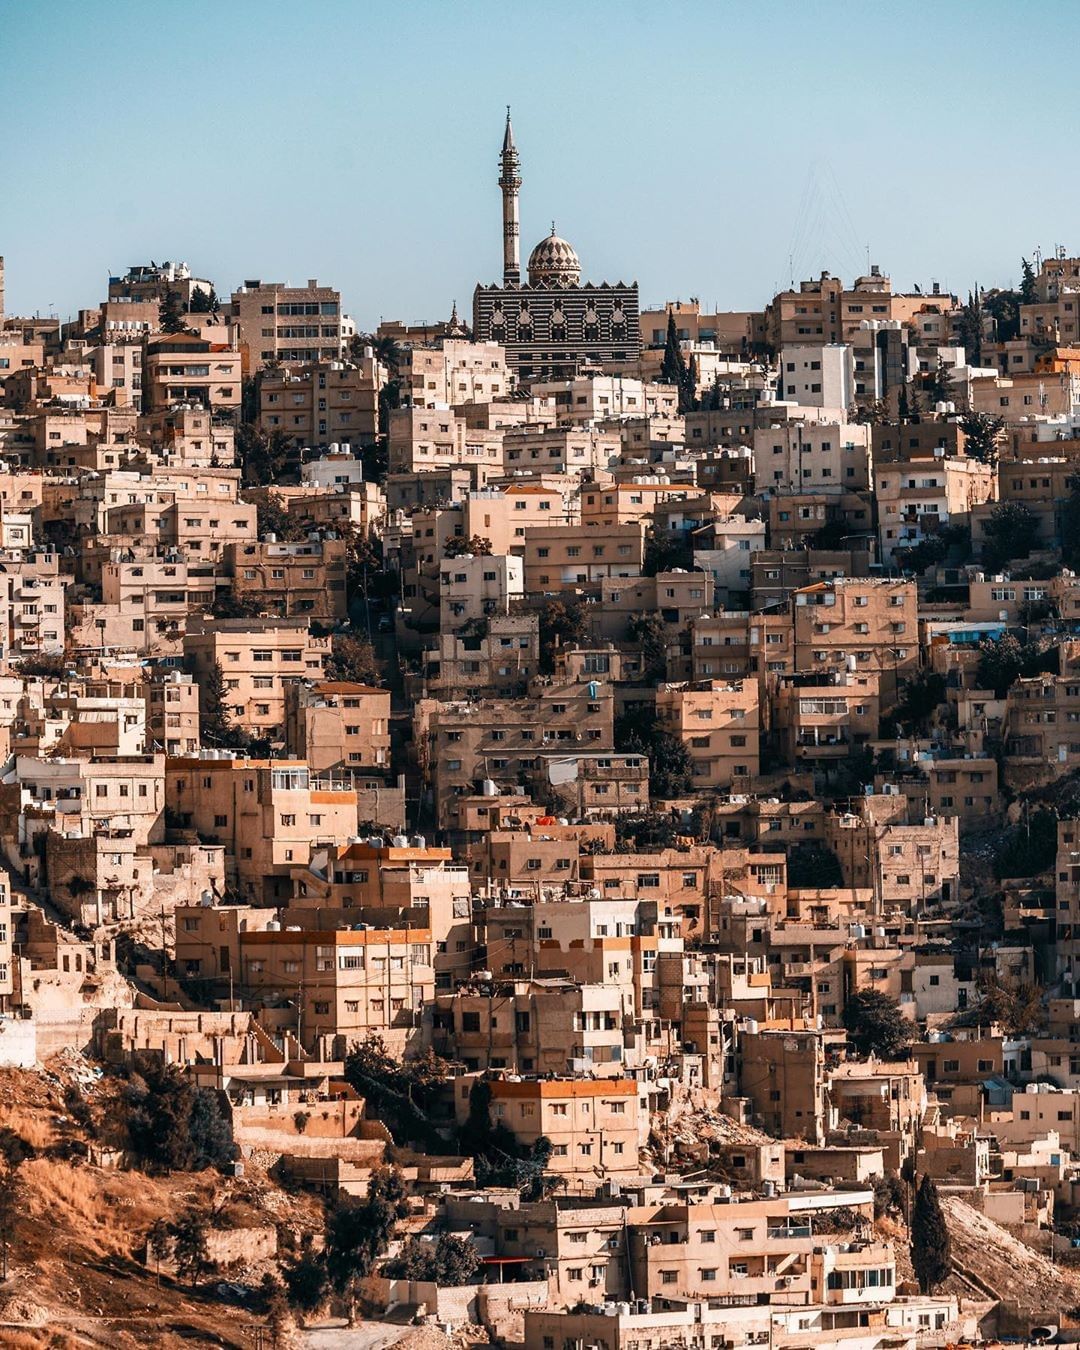 The cherry on top 🍒⁠ ⁠ #VisitJordan #ShareYourJordan #Amman Photo Credit @who.sane